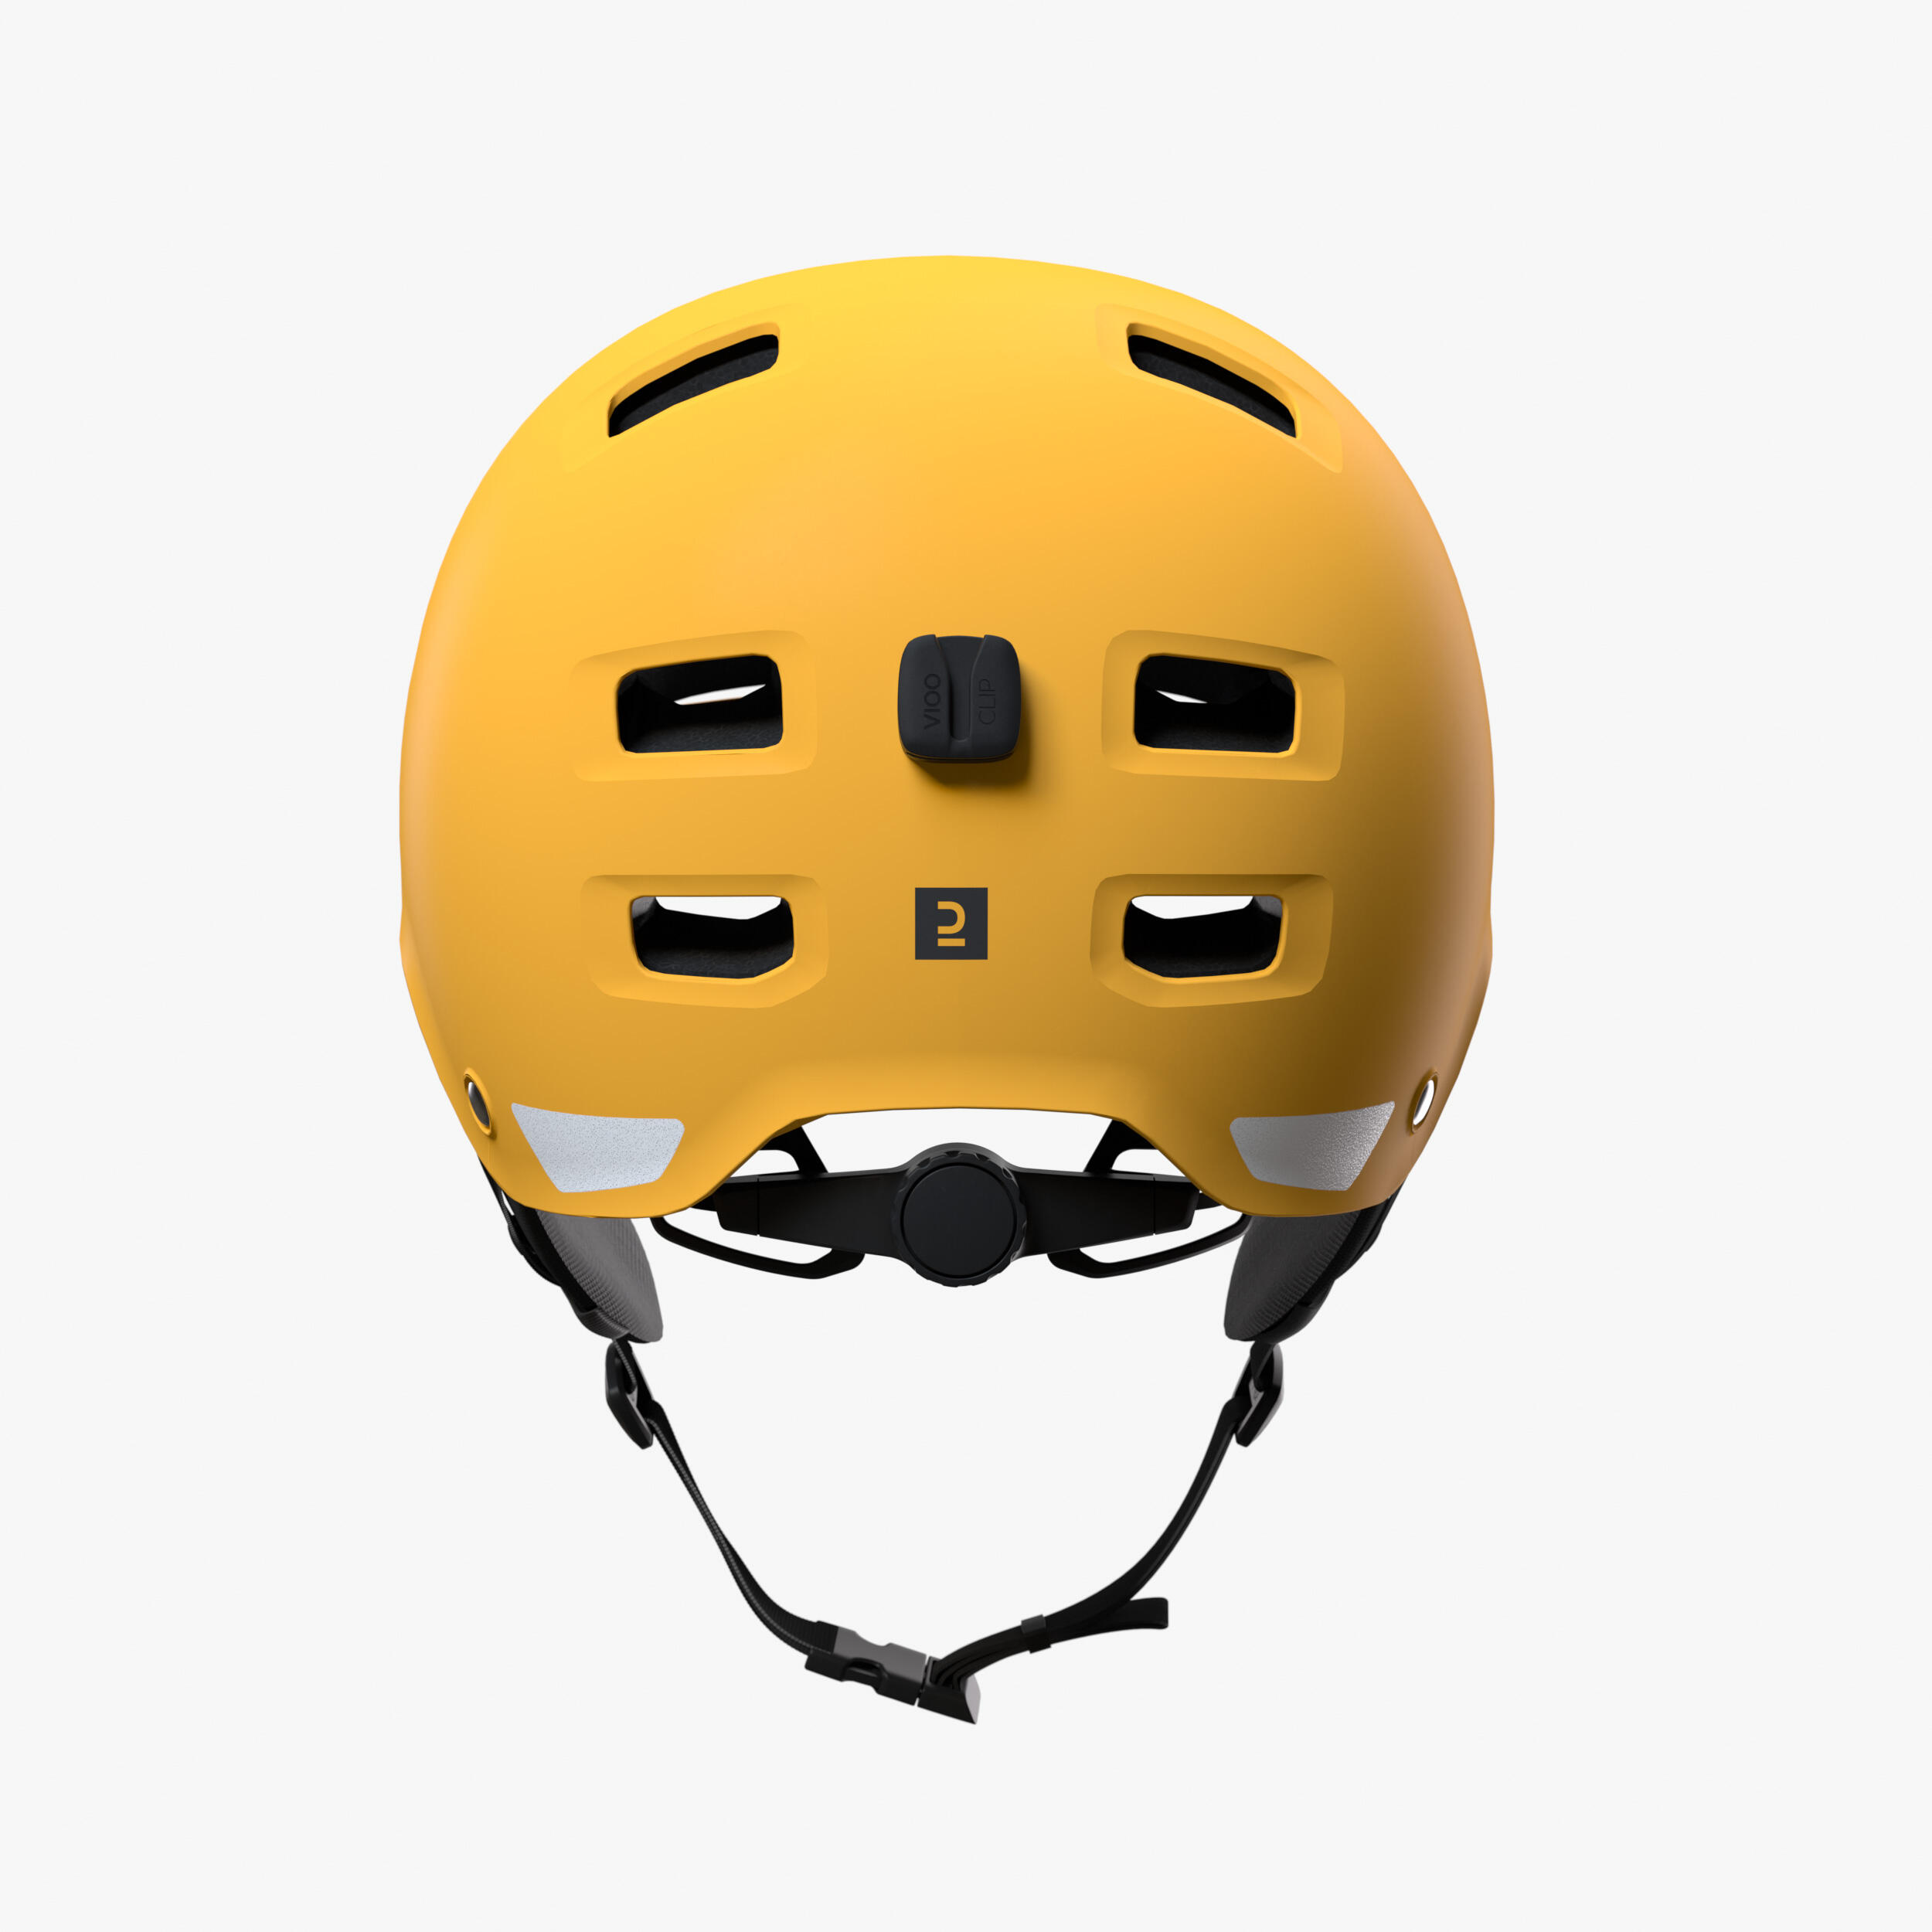 City Cycling Bowl Helmet - Yellow 5/9